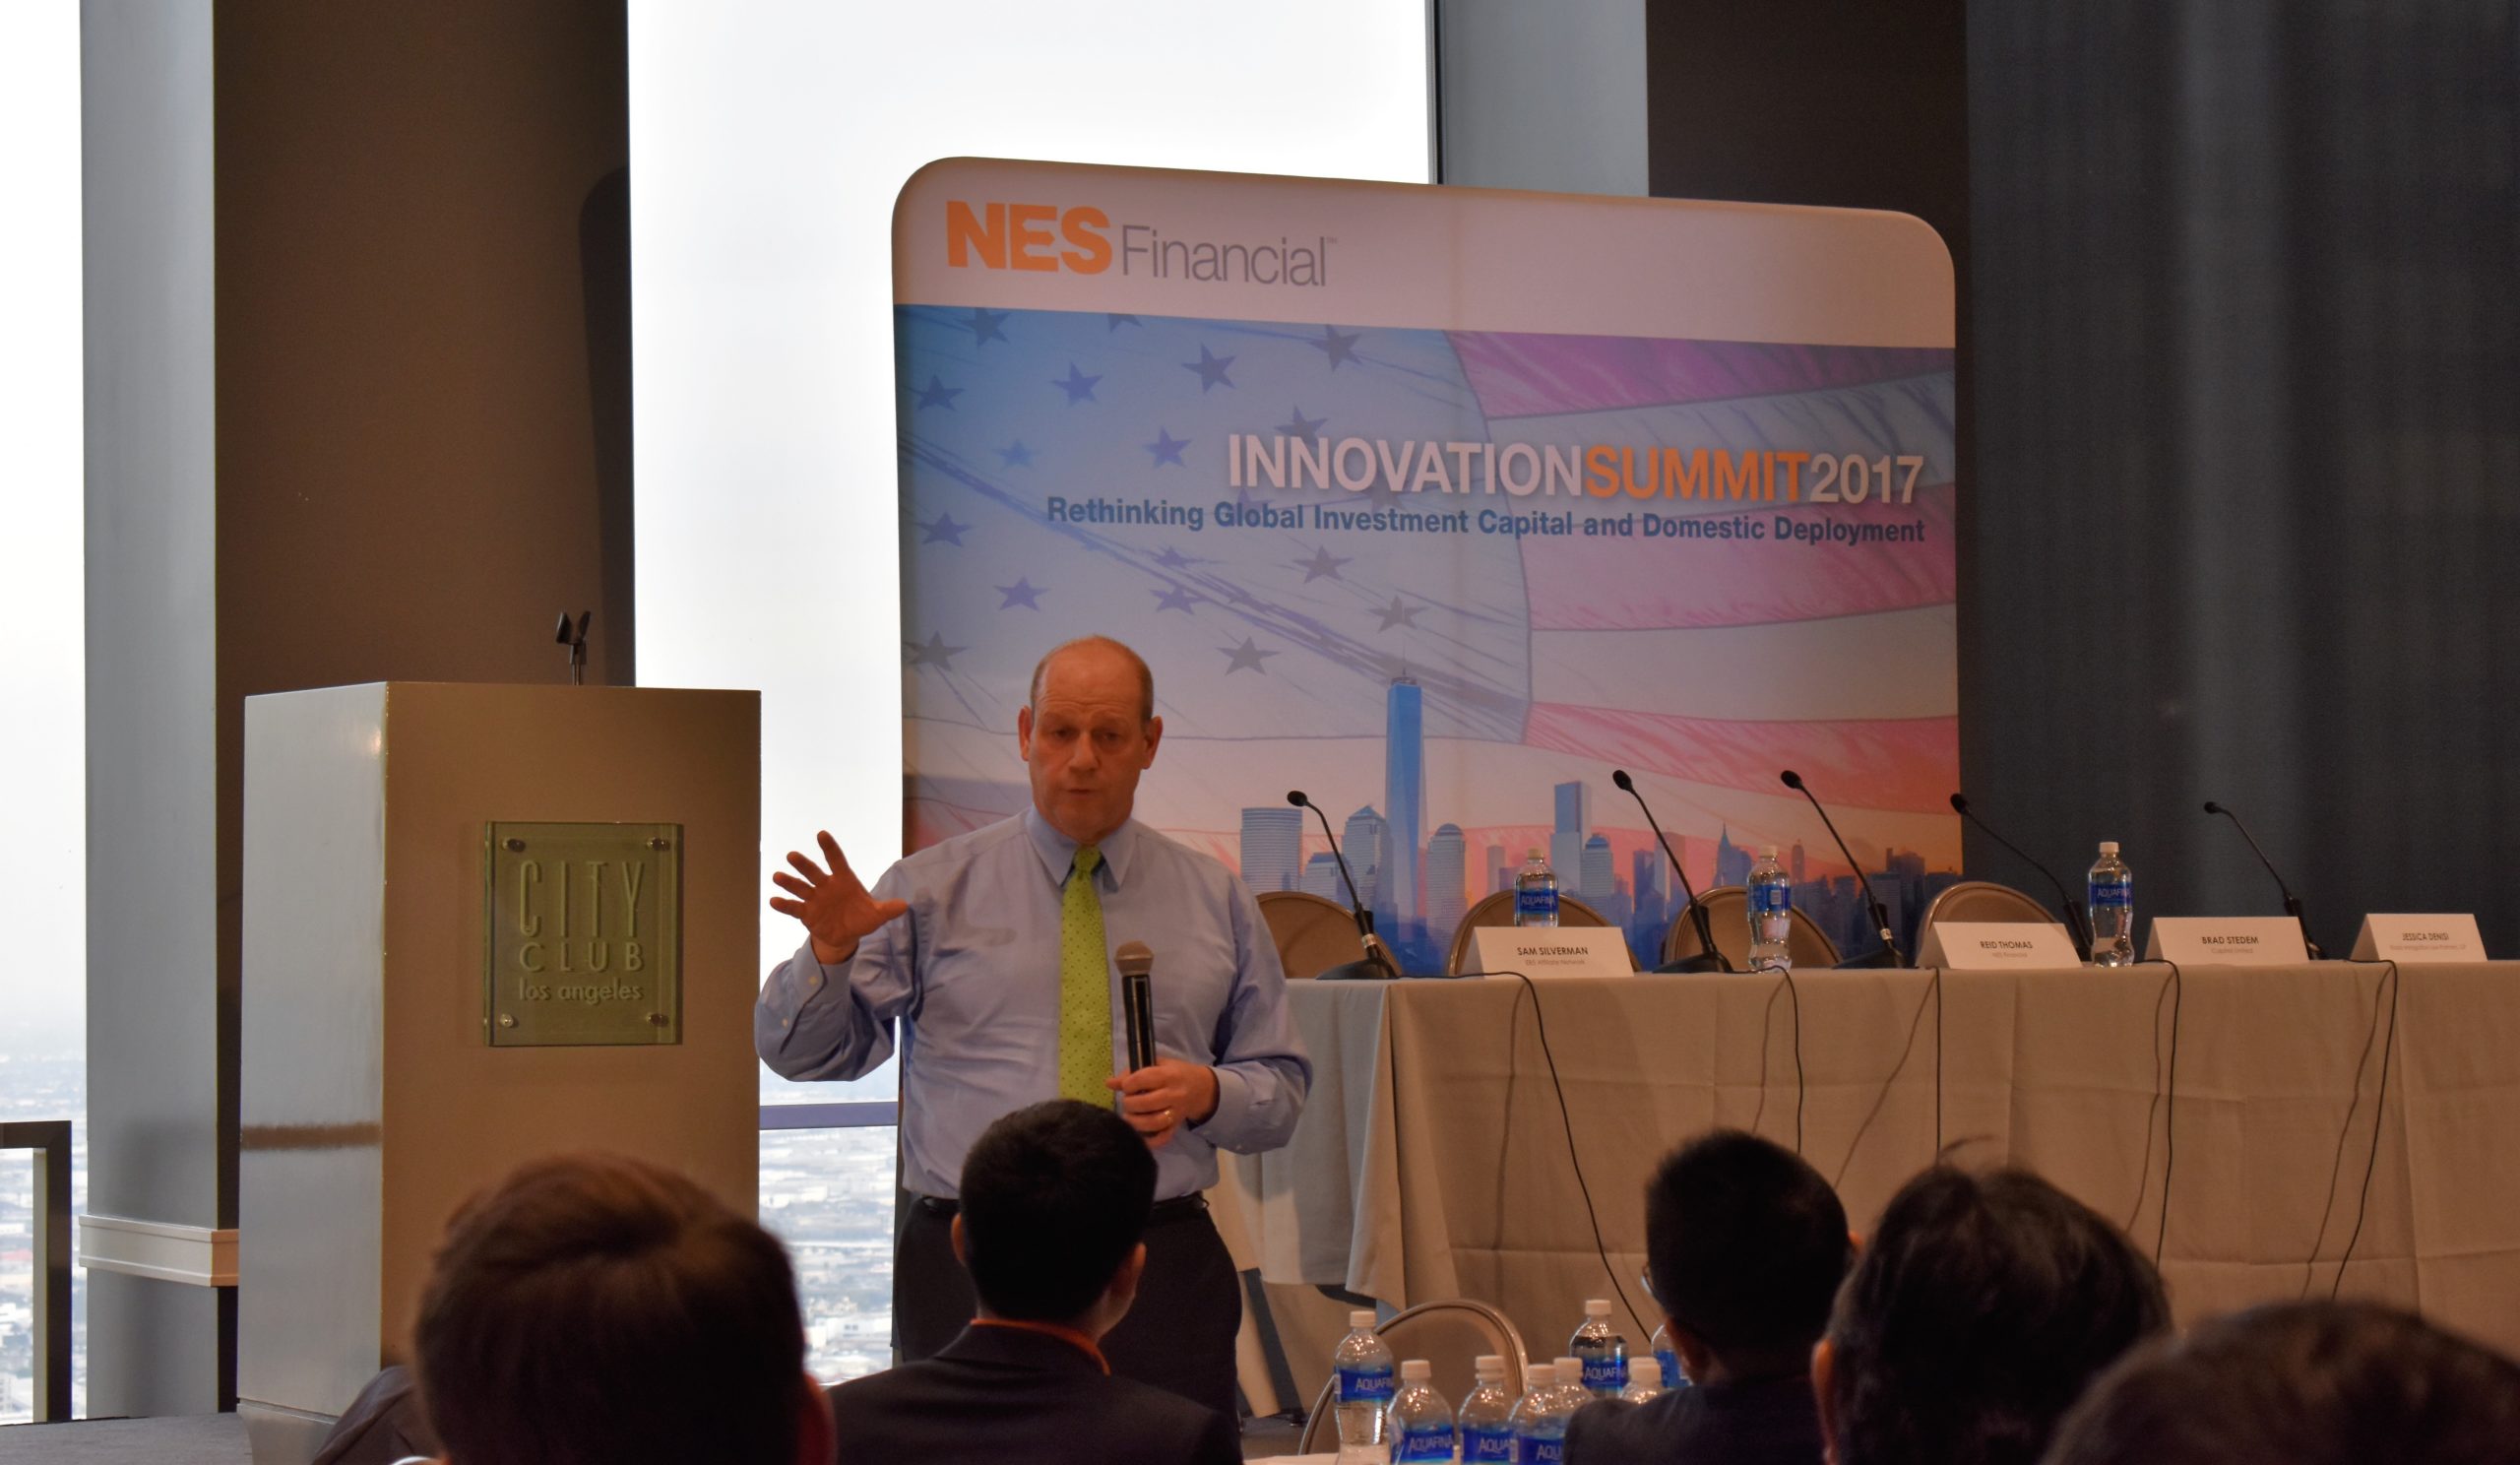 Innovation-Summit-2017